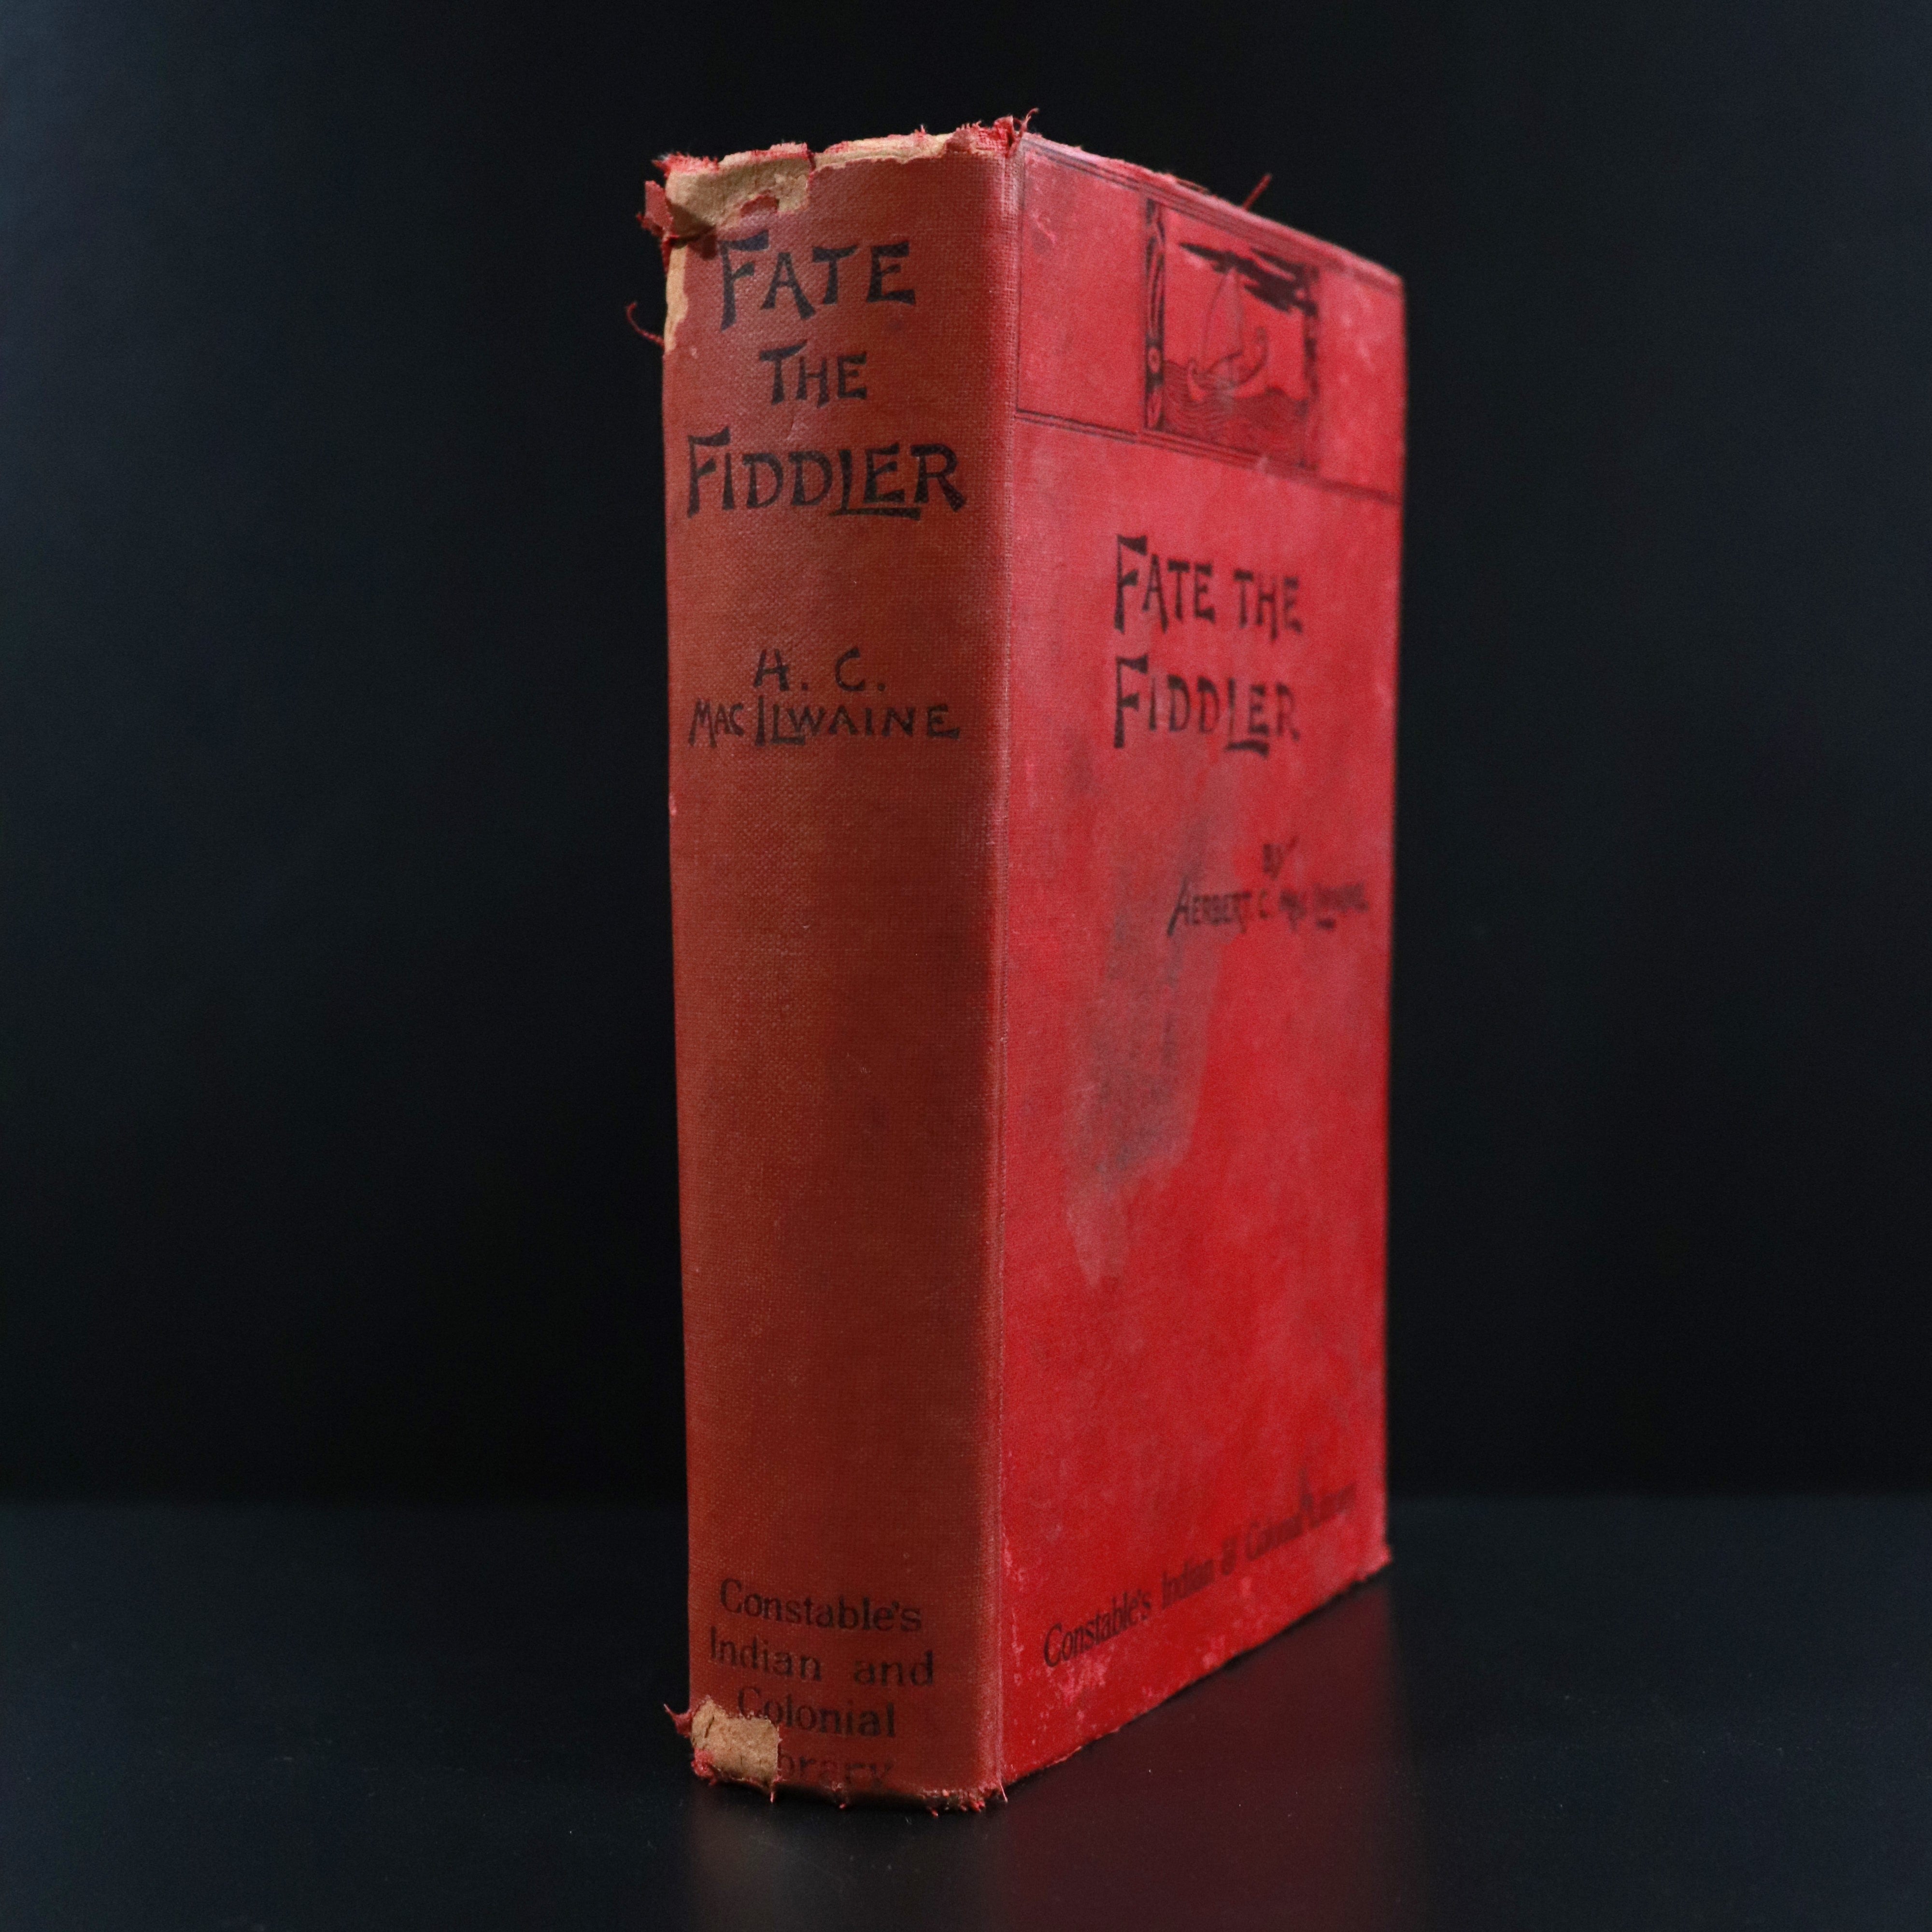 1901 Fate The Fiddler by Herbert C. Macilwaine Antique Australian Fiction Book